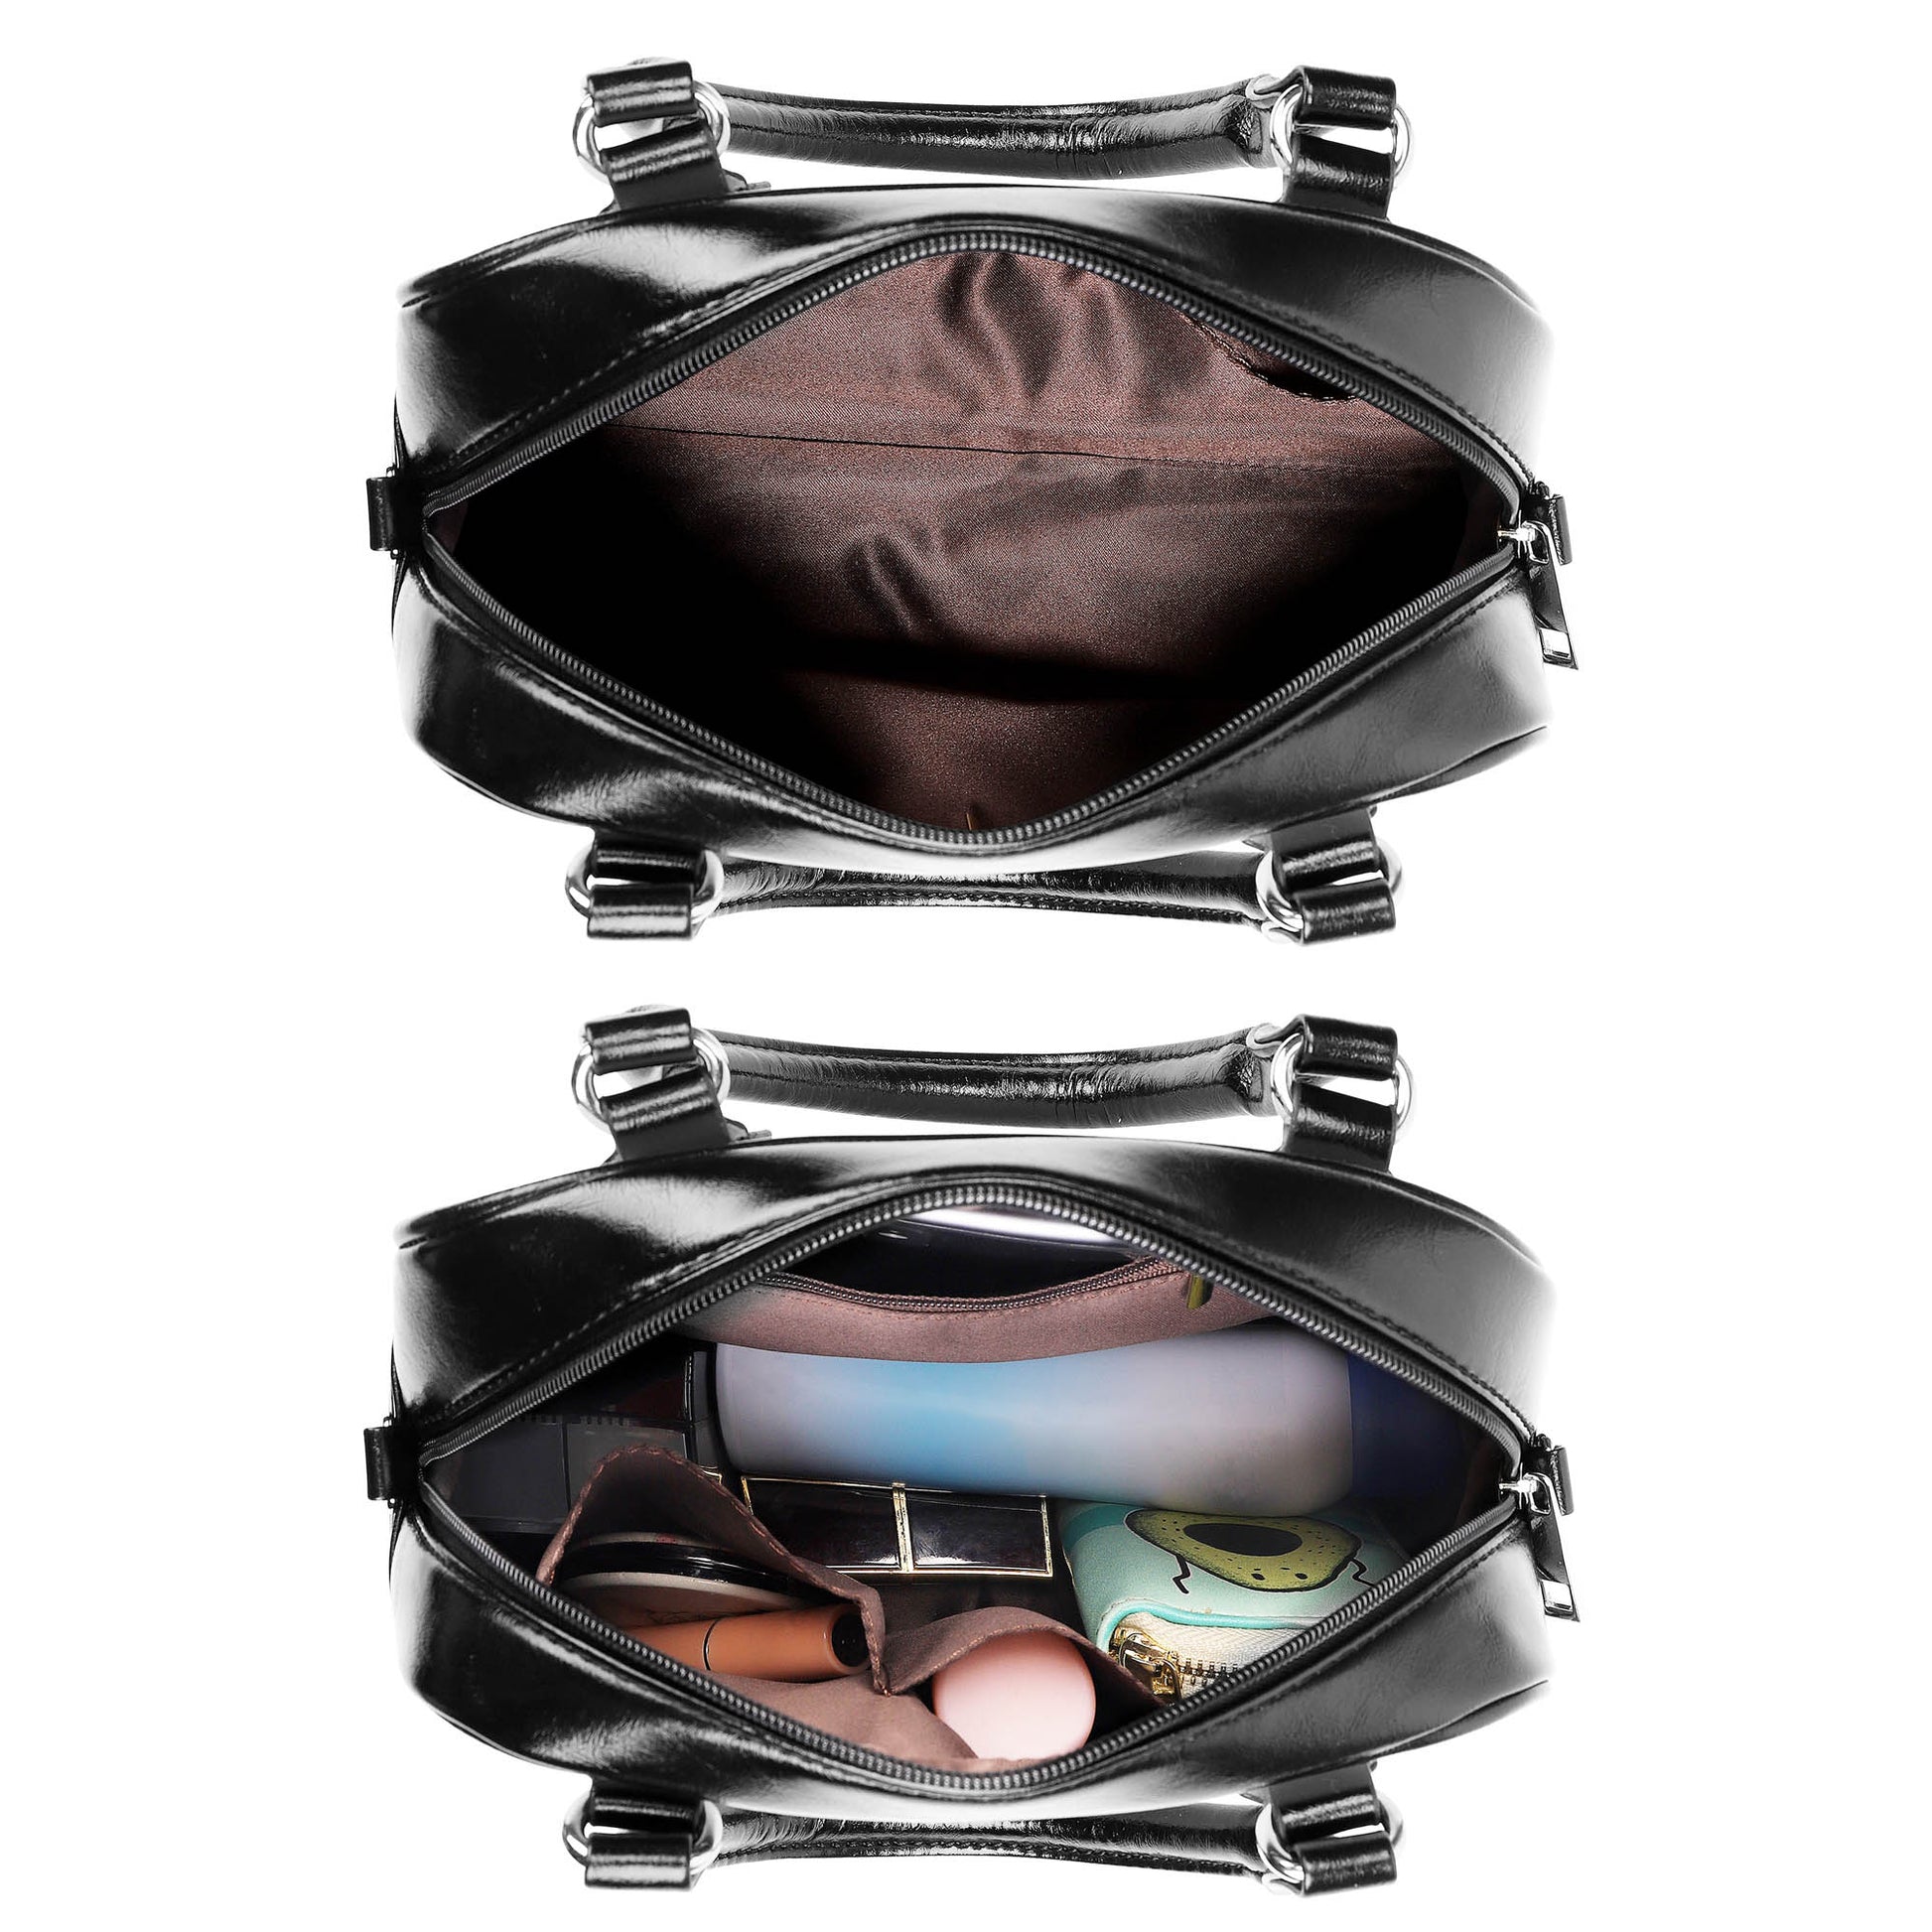 MacLeay Tartan Shoulder Handbags - Tartanvibesclothing